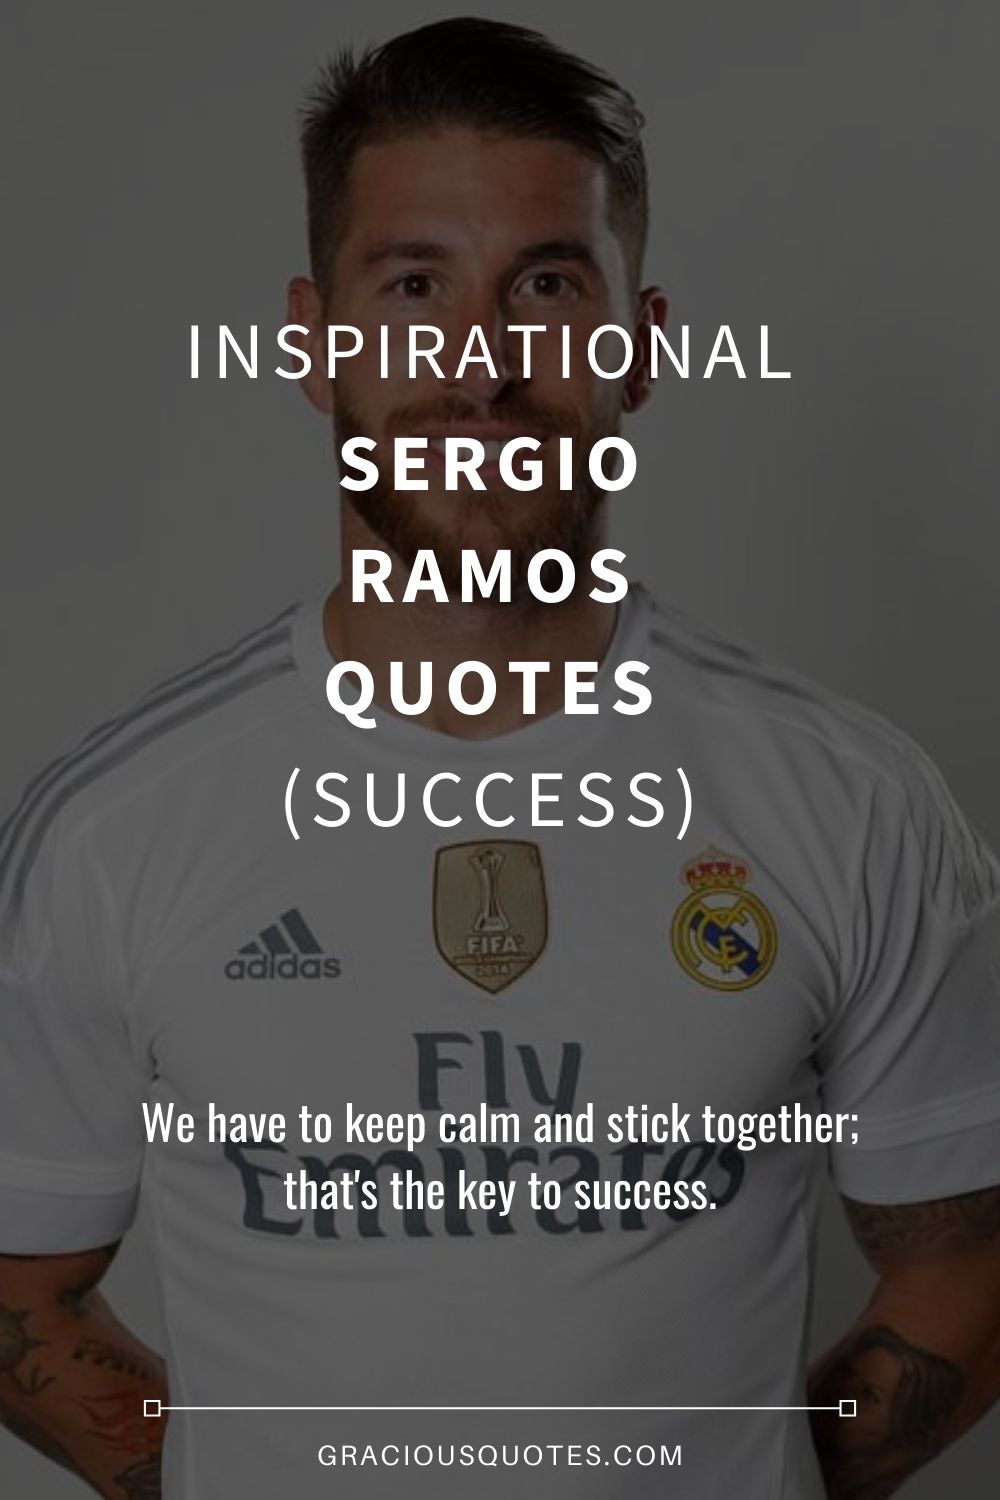 Inspirational Sergio Ramos Quotes (SUCCESS) - Gracious Quotes